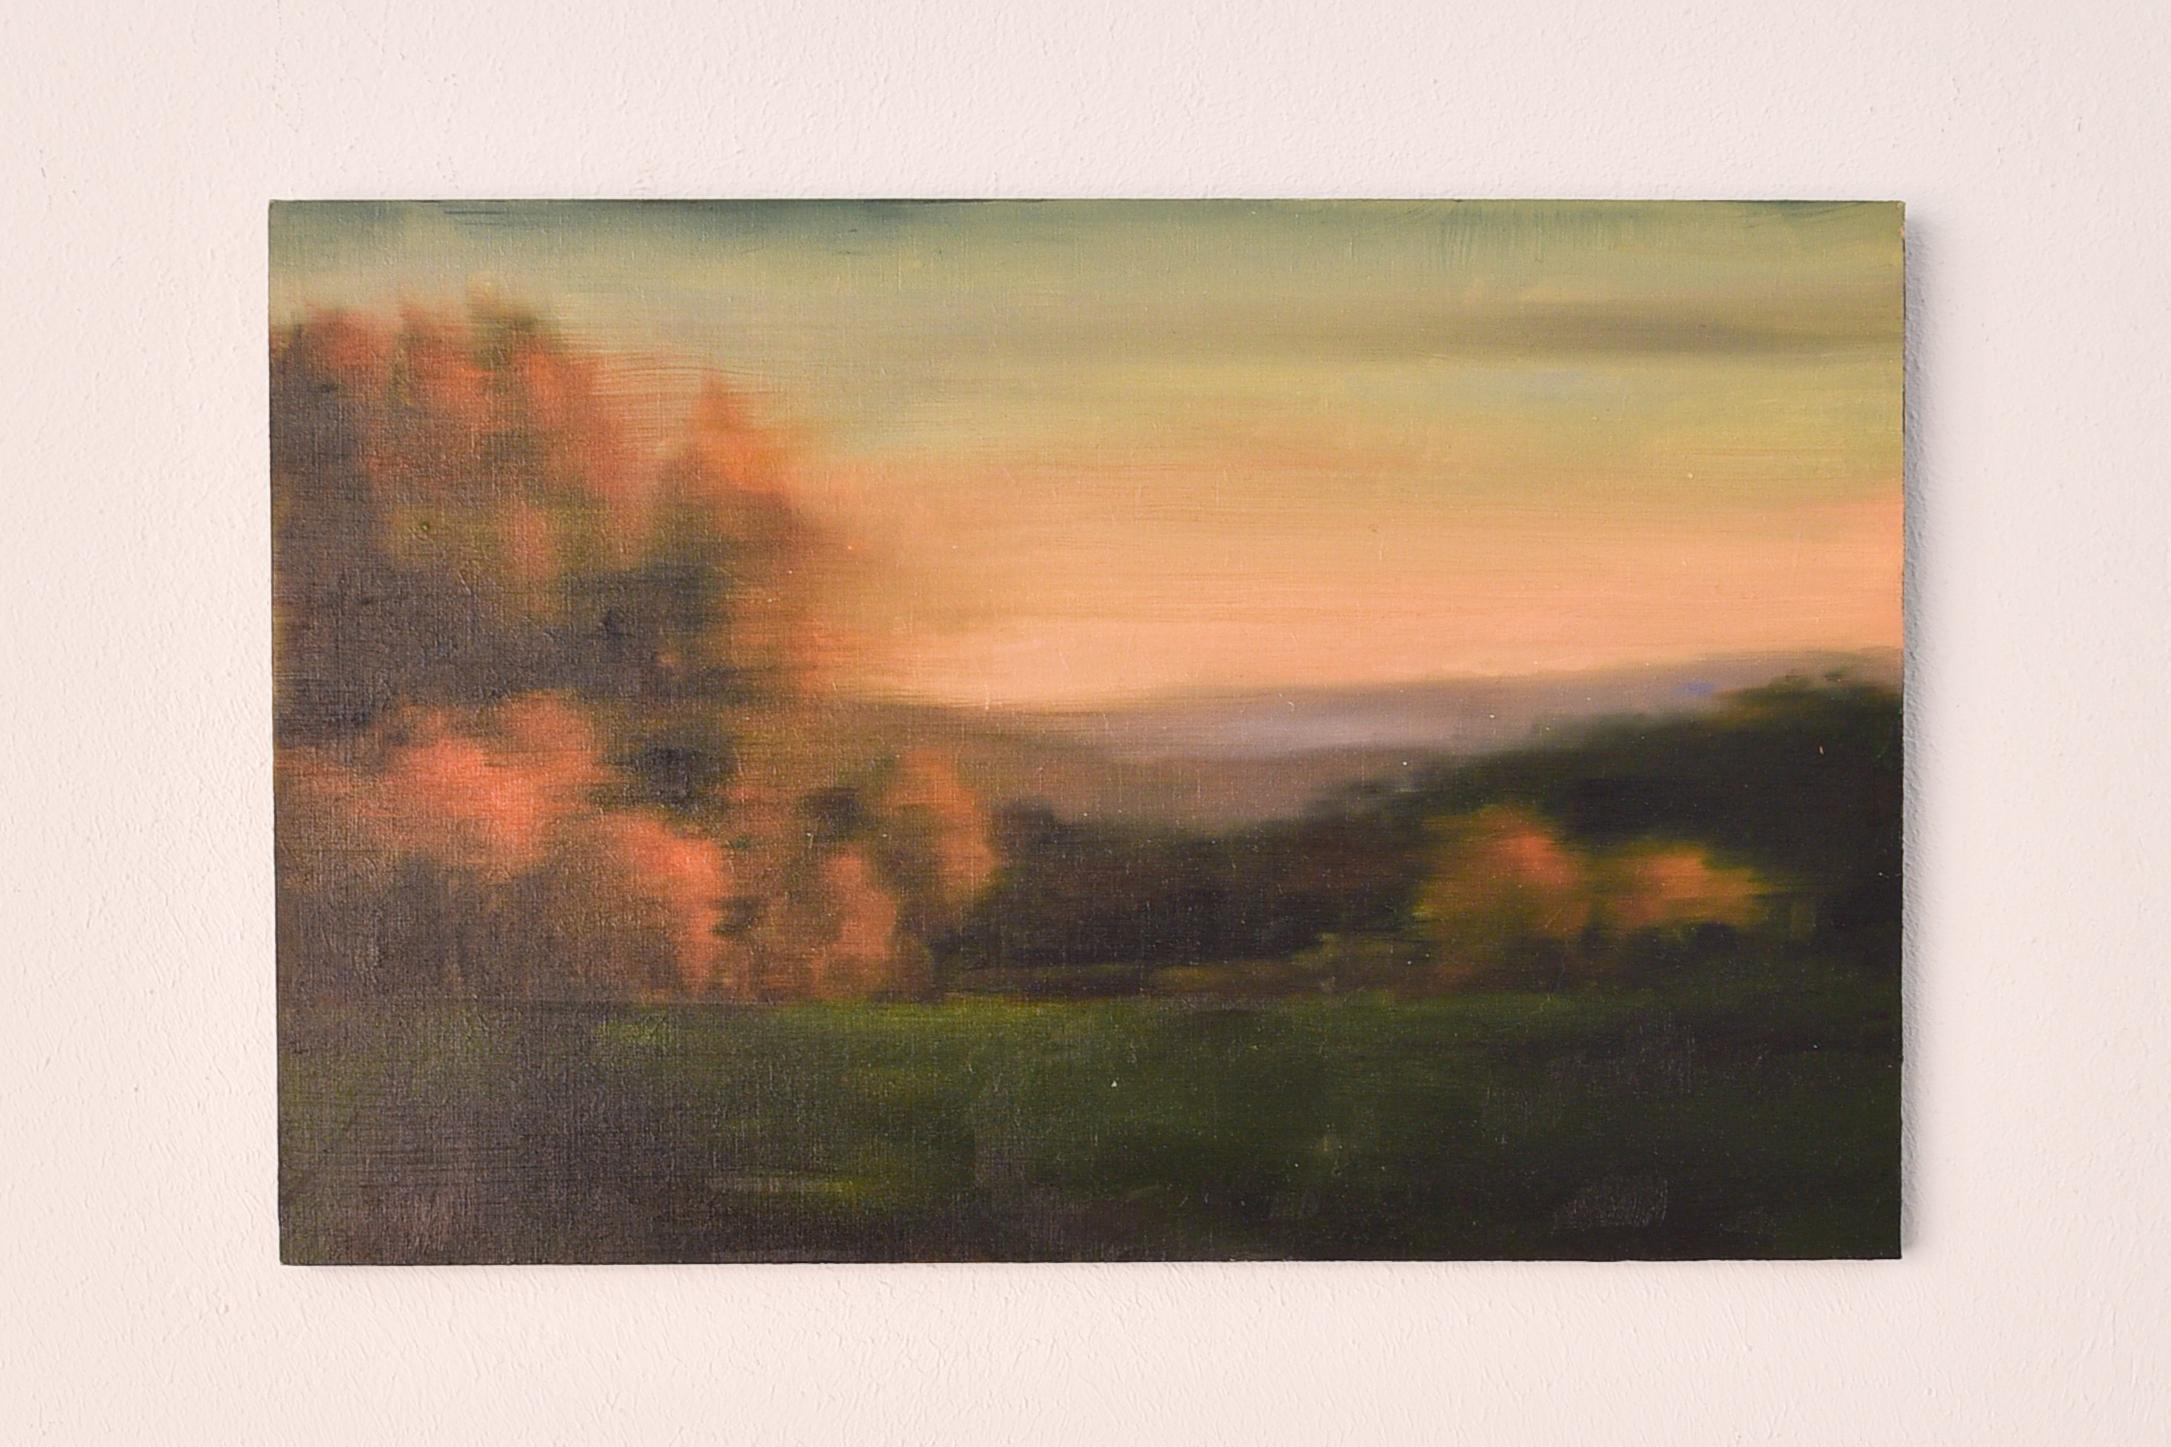 Neide Carreira Landscape Painting - 'Autumn evening', romantic landscape painting with warm colors, oil on wood